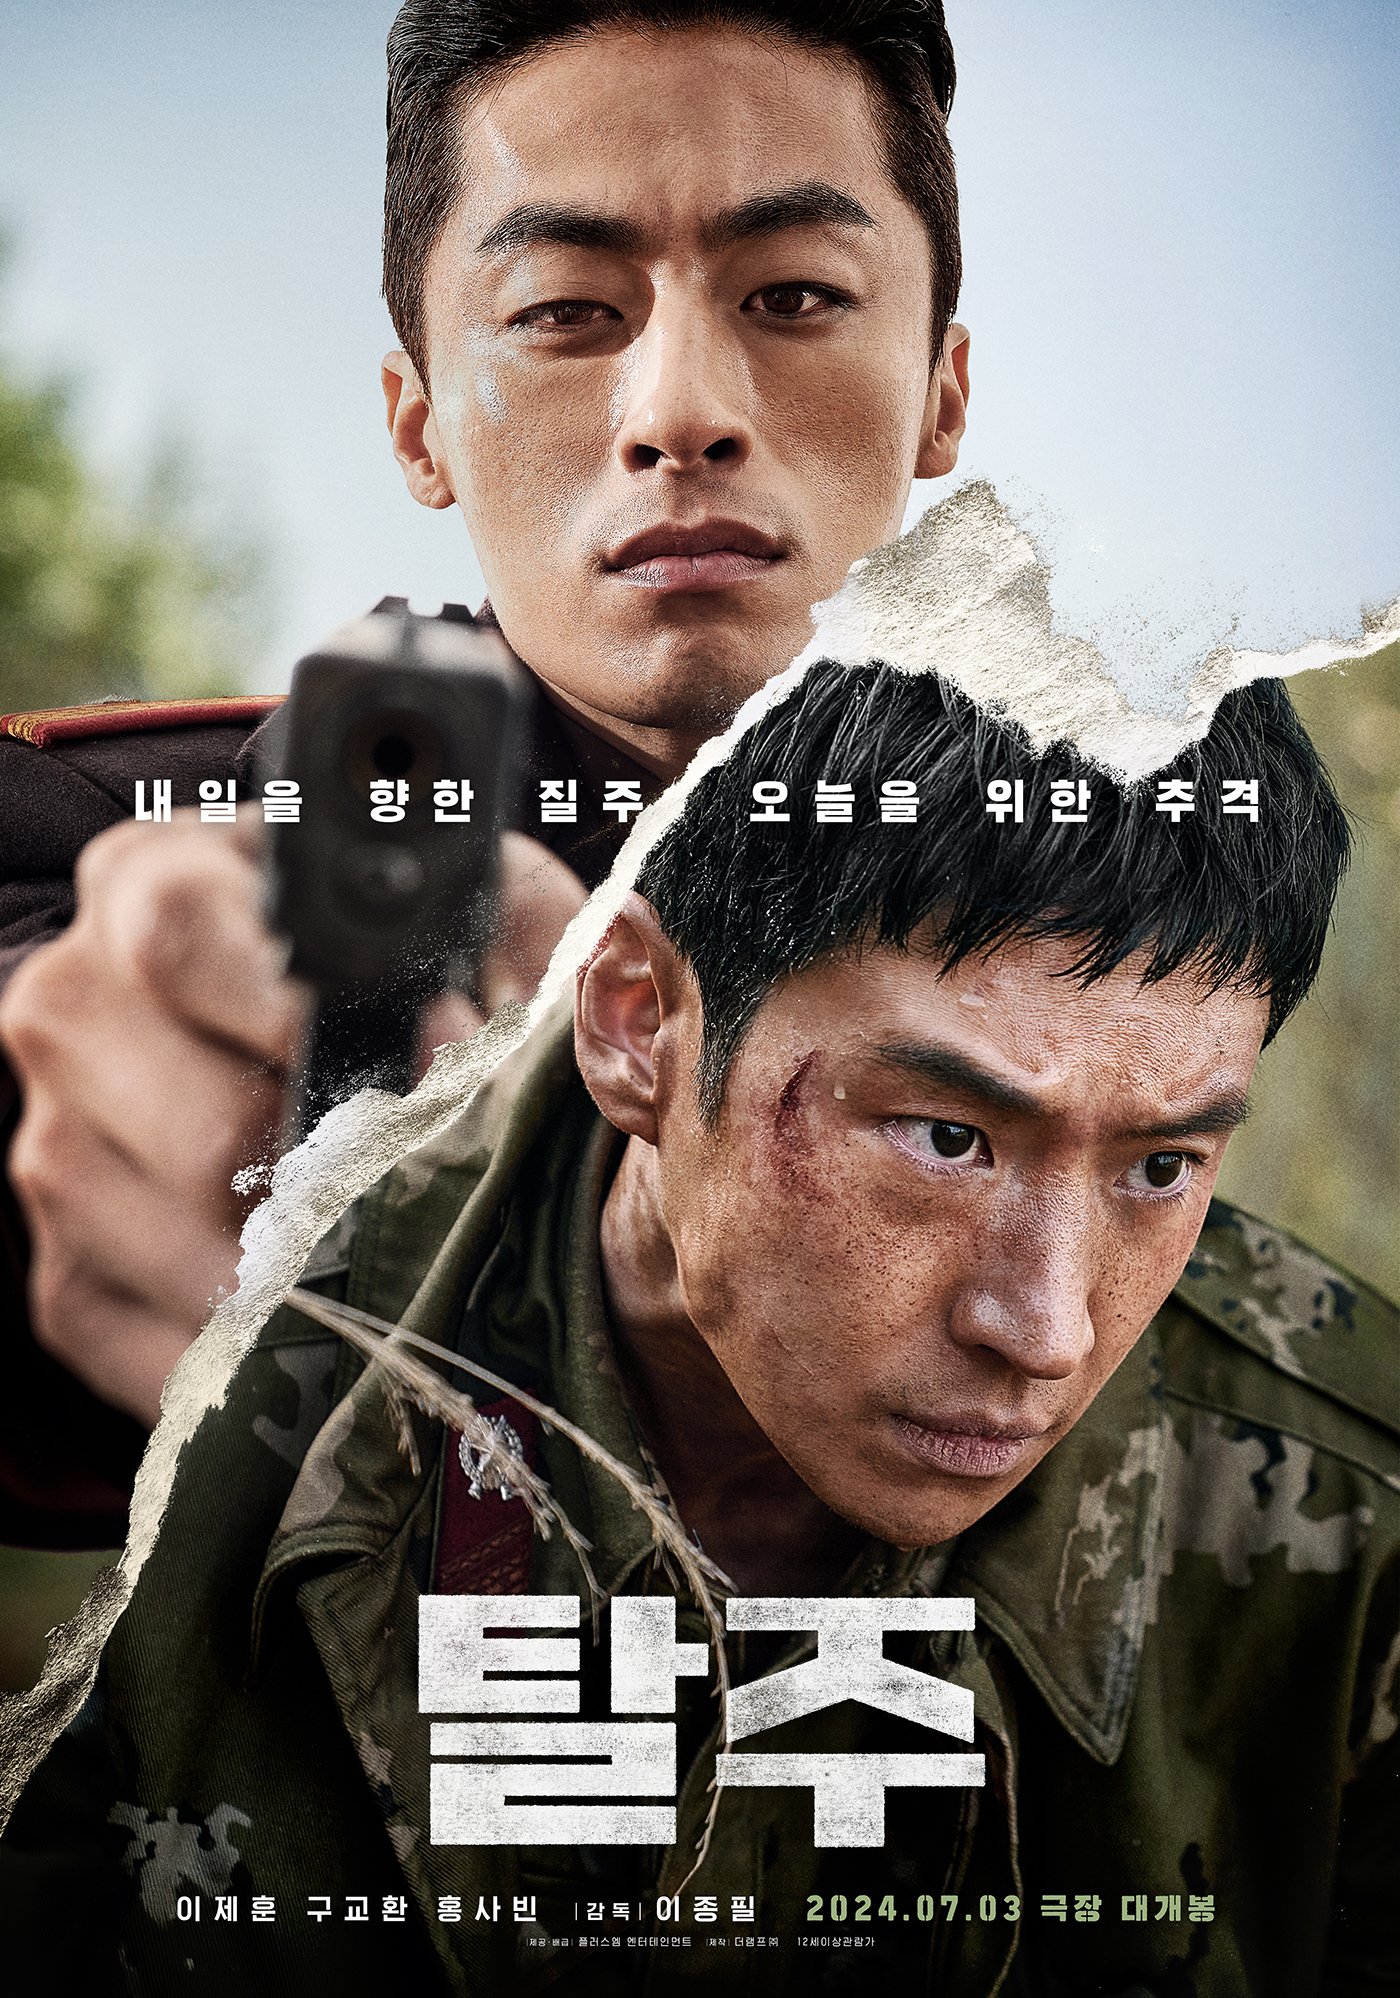 Watch: Lee Je Hoon And Hong Sa Bin Evade Capture Amid Intense Chase With Koo Kyo Hwan In Upcoming Film 